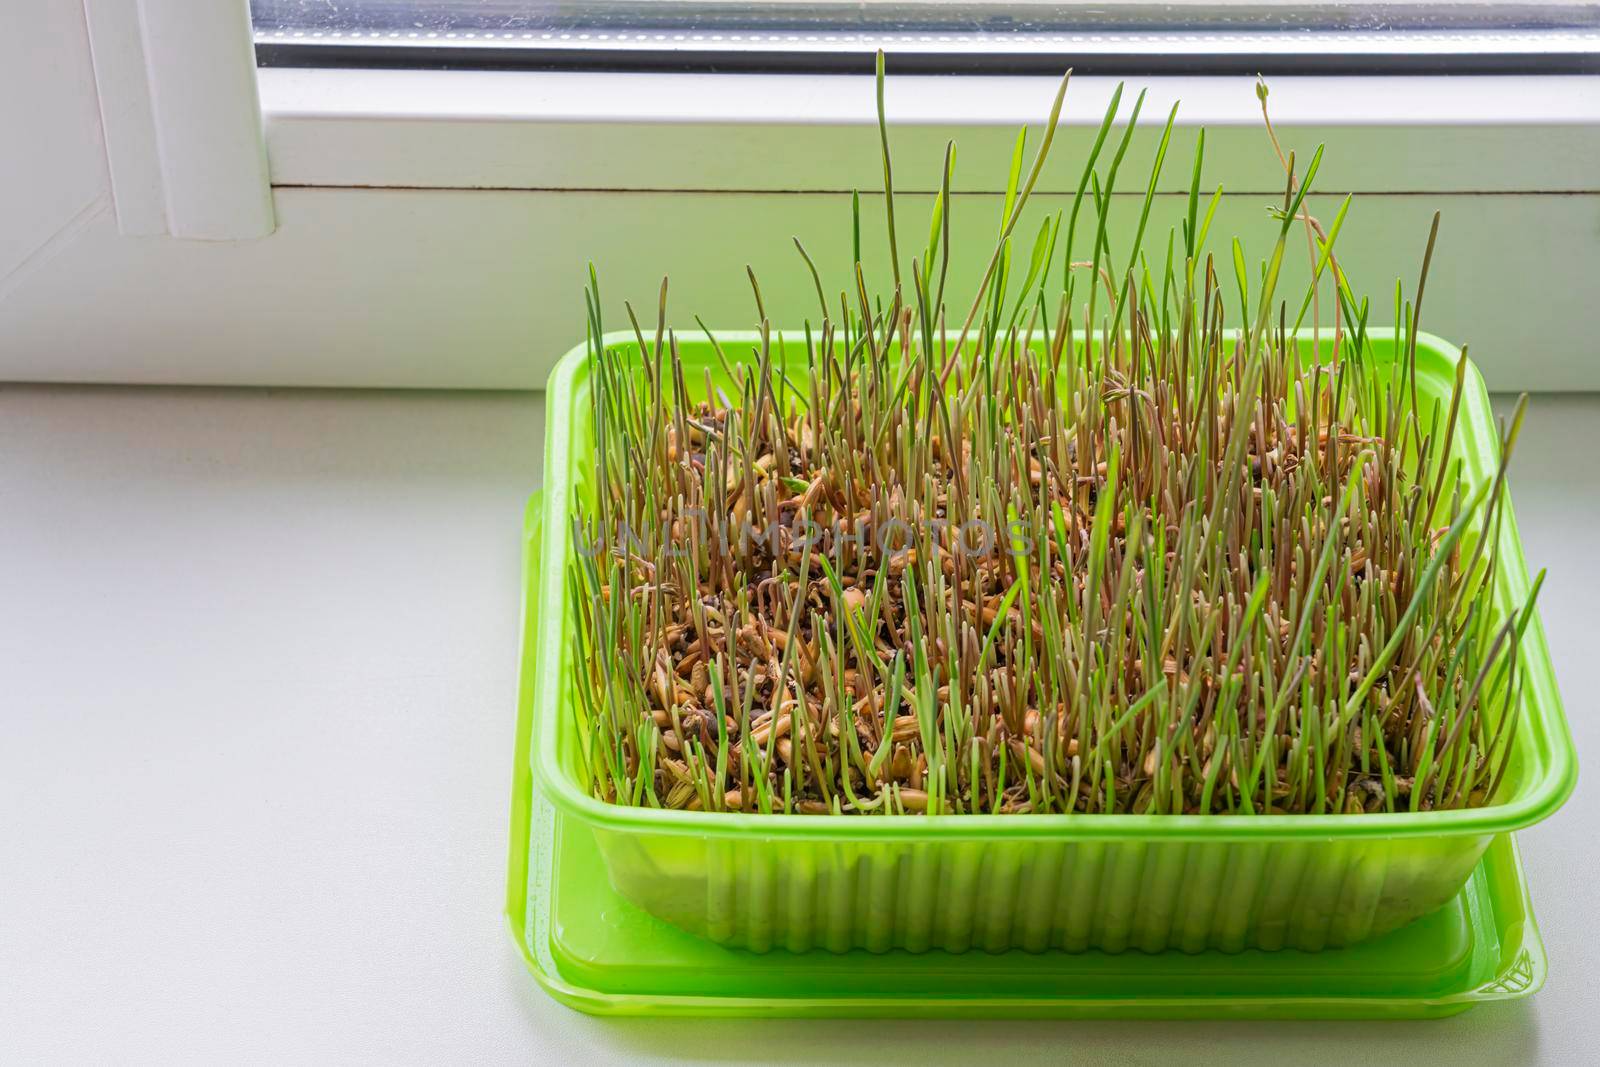 grass tray for feeding animals on the windowsill by roman112007